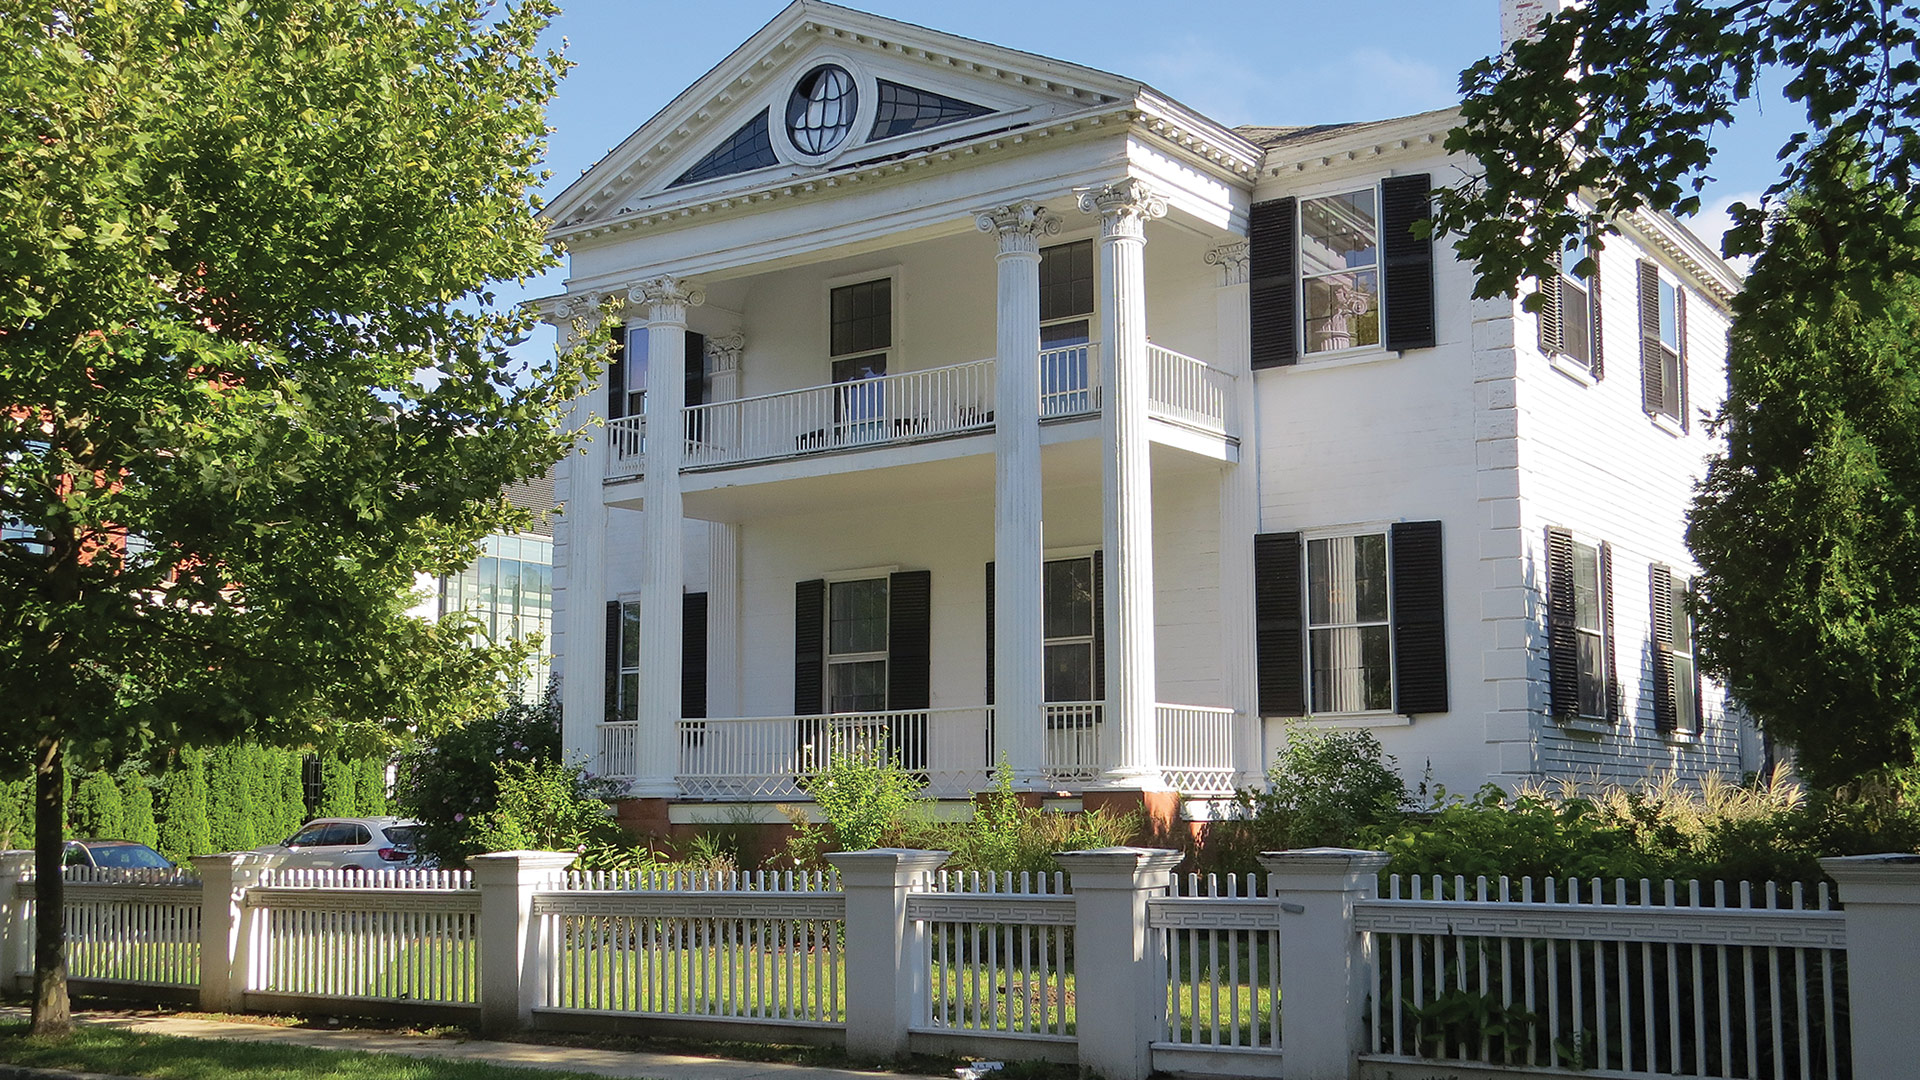 The historic Alexander House